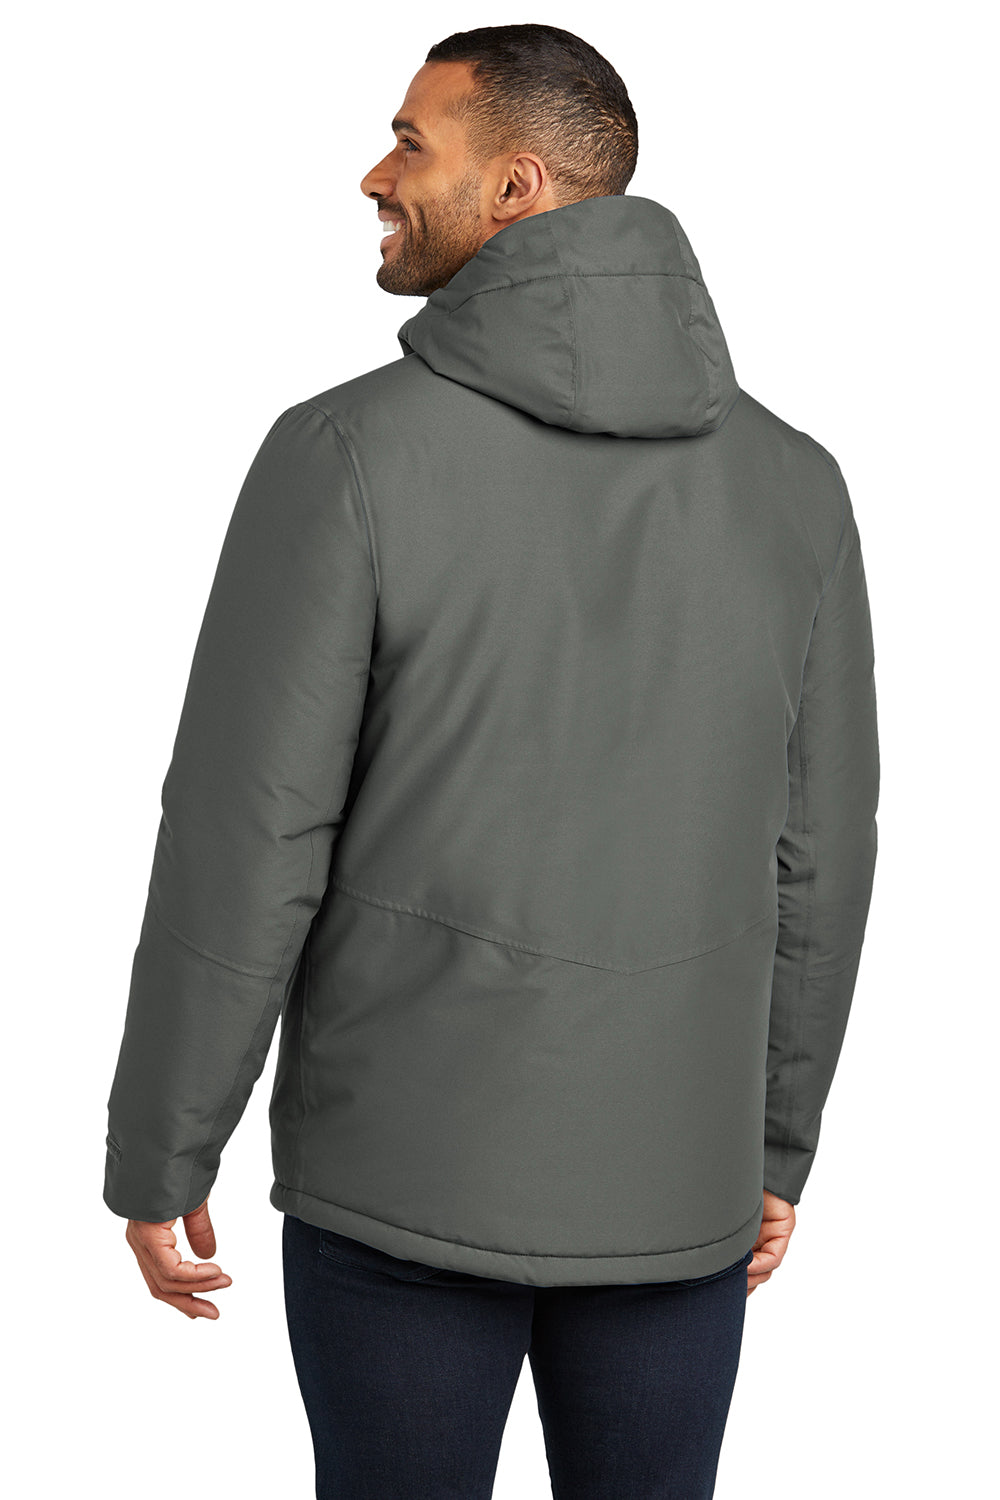 Port Authority J362 Mens Venture Waterproof Insulated Full Zip Hooded Jacket Smoke Grey Back